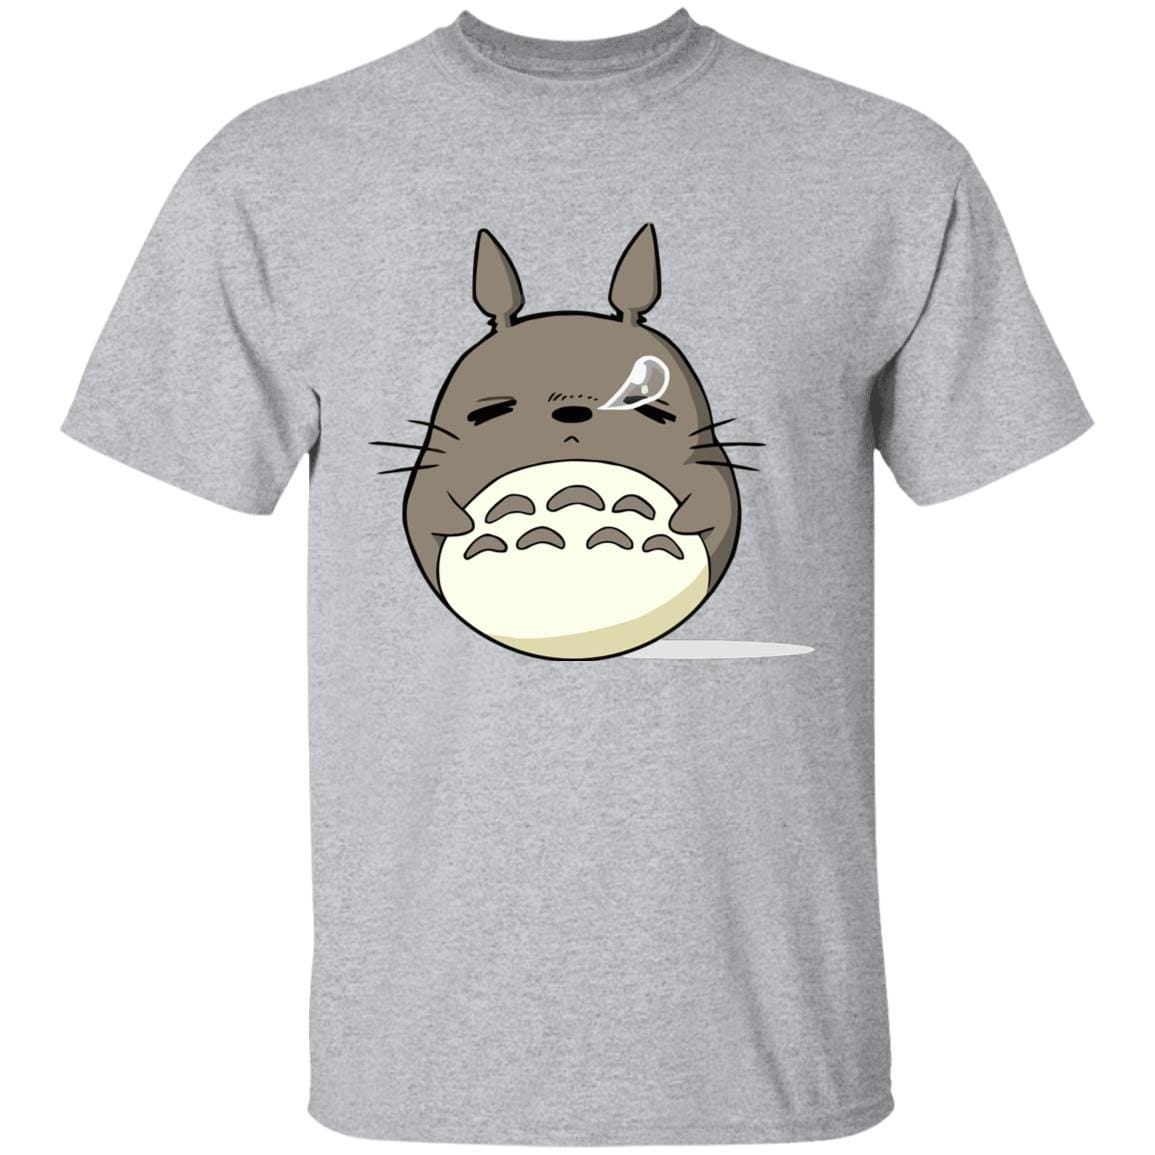 Sleepy Totoro T Shirt Ghibli Store ghibli.store